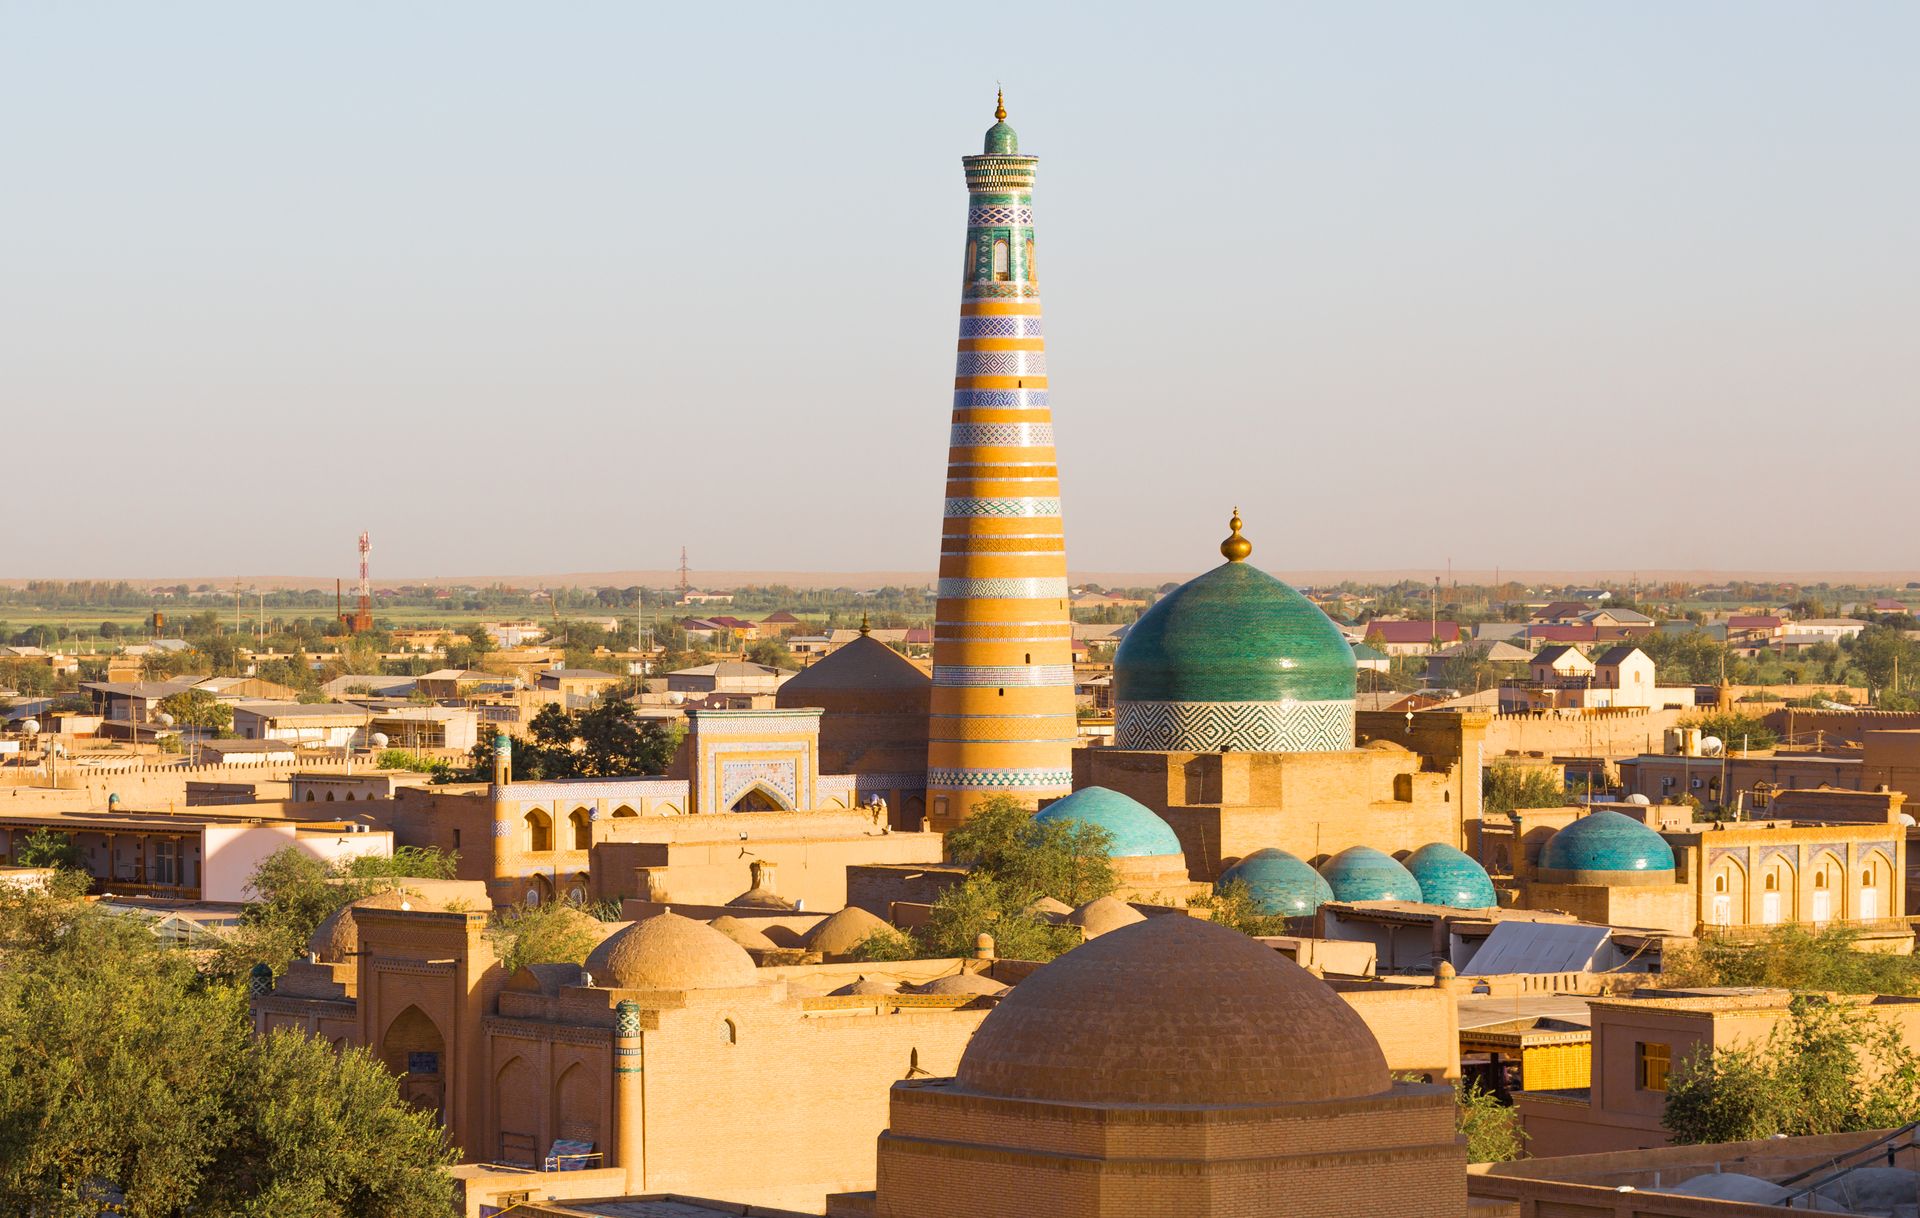 Minaret Kalta Minor et mosquée Pavlakhan Makmoud, Khiva - Ouzbékistan ©iStock